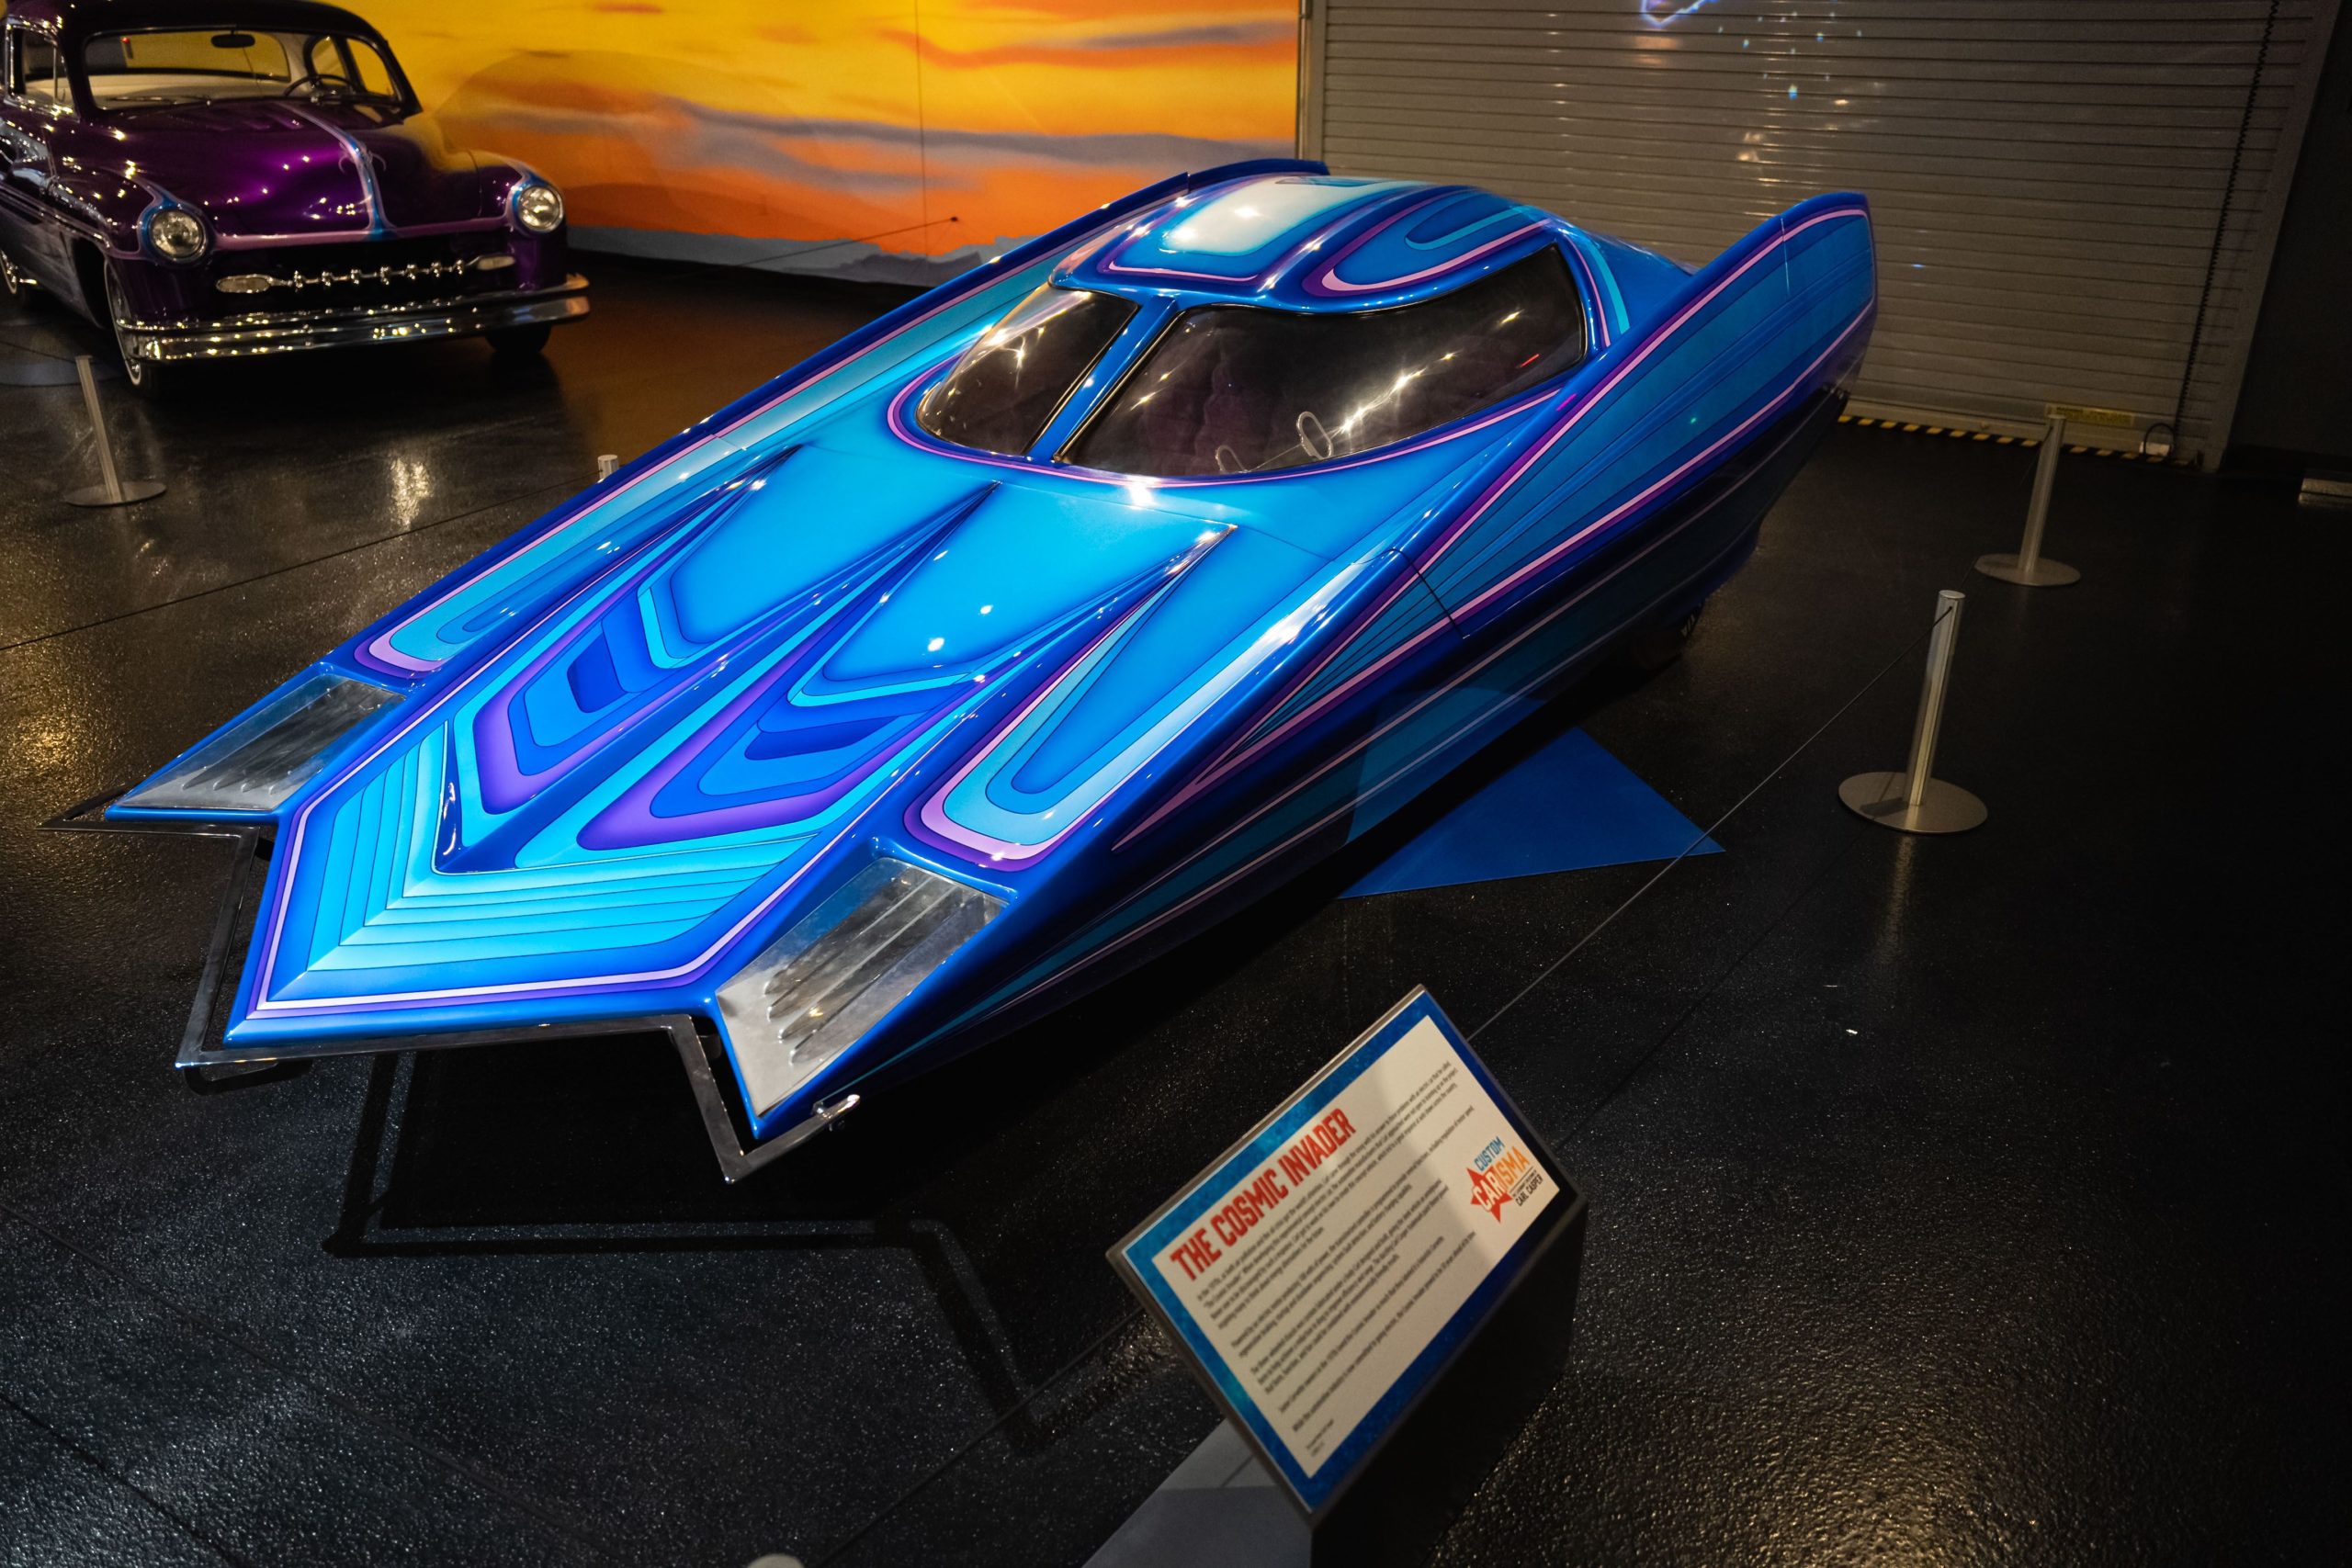 Legendary Creations of Carl Casper exhibit at National Corvette Museum